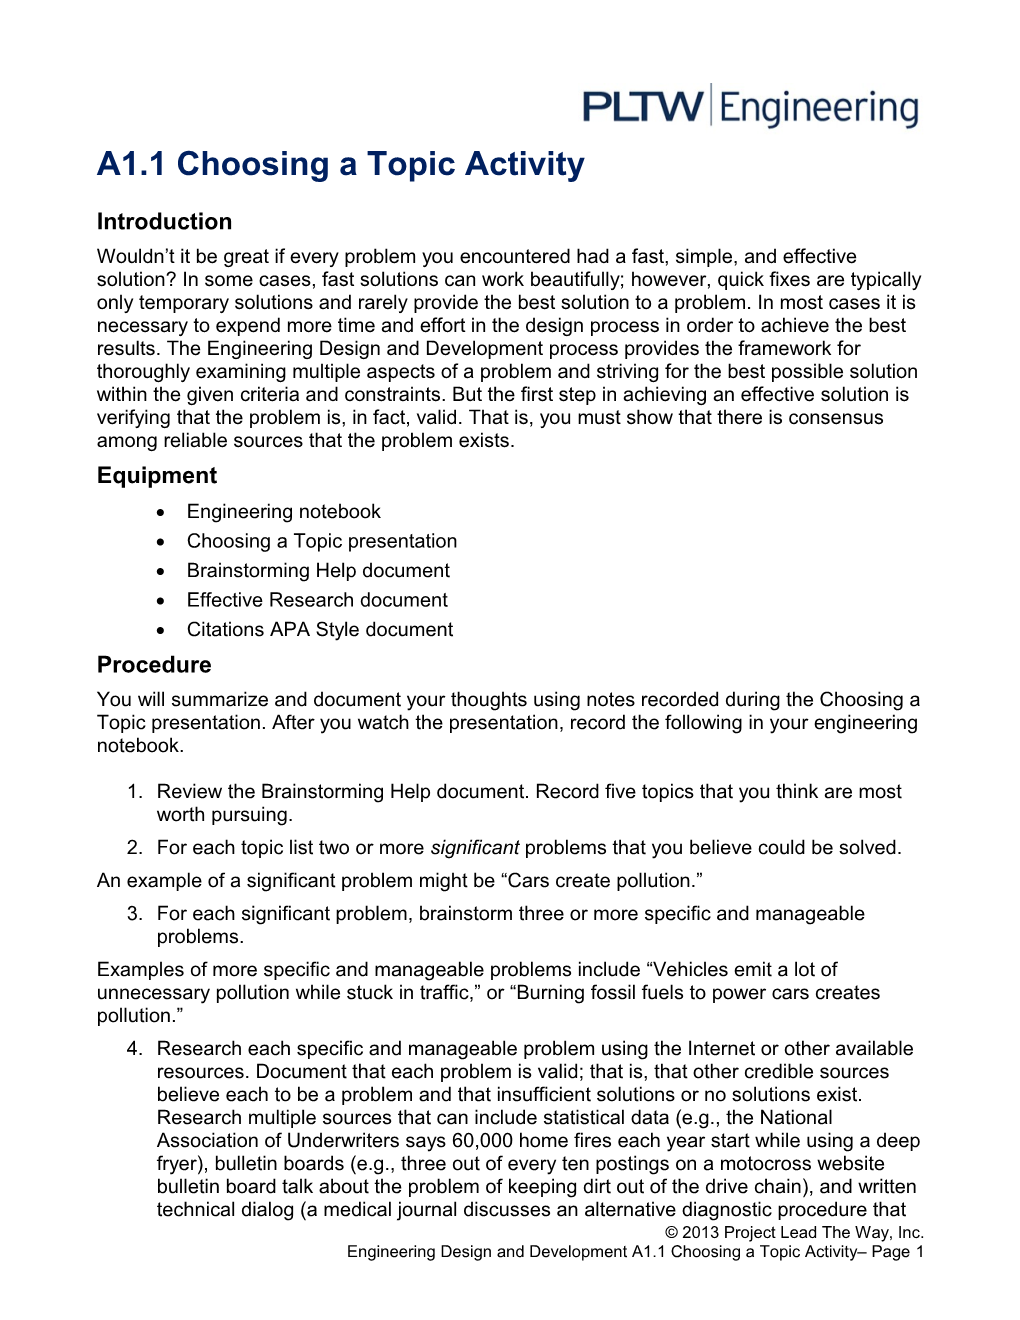 A1.1 Choosing a Topic Activity